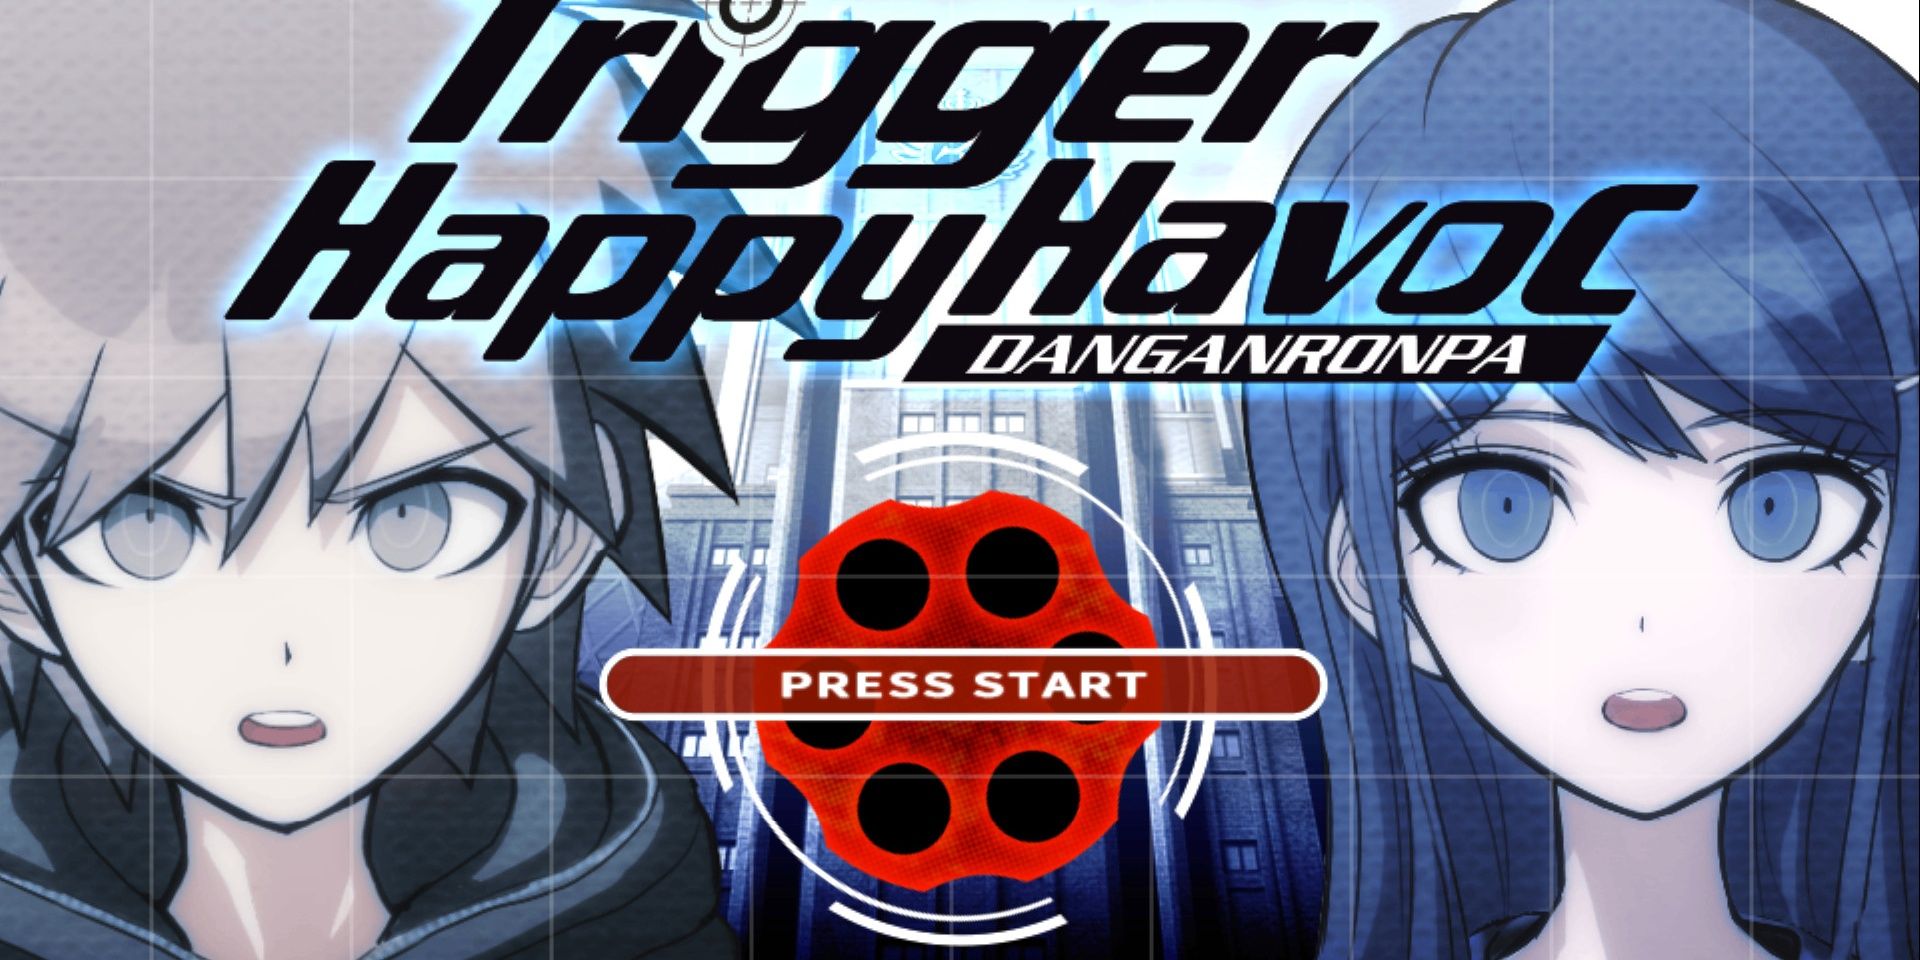 Start page for Danganronpa Trigger Happy Havoc